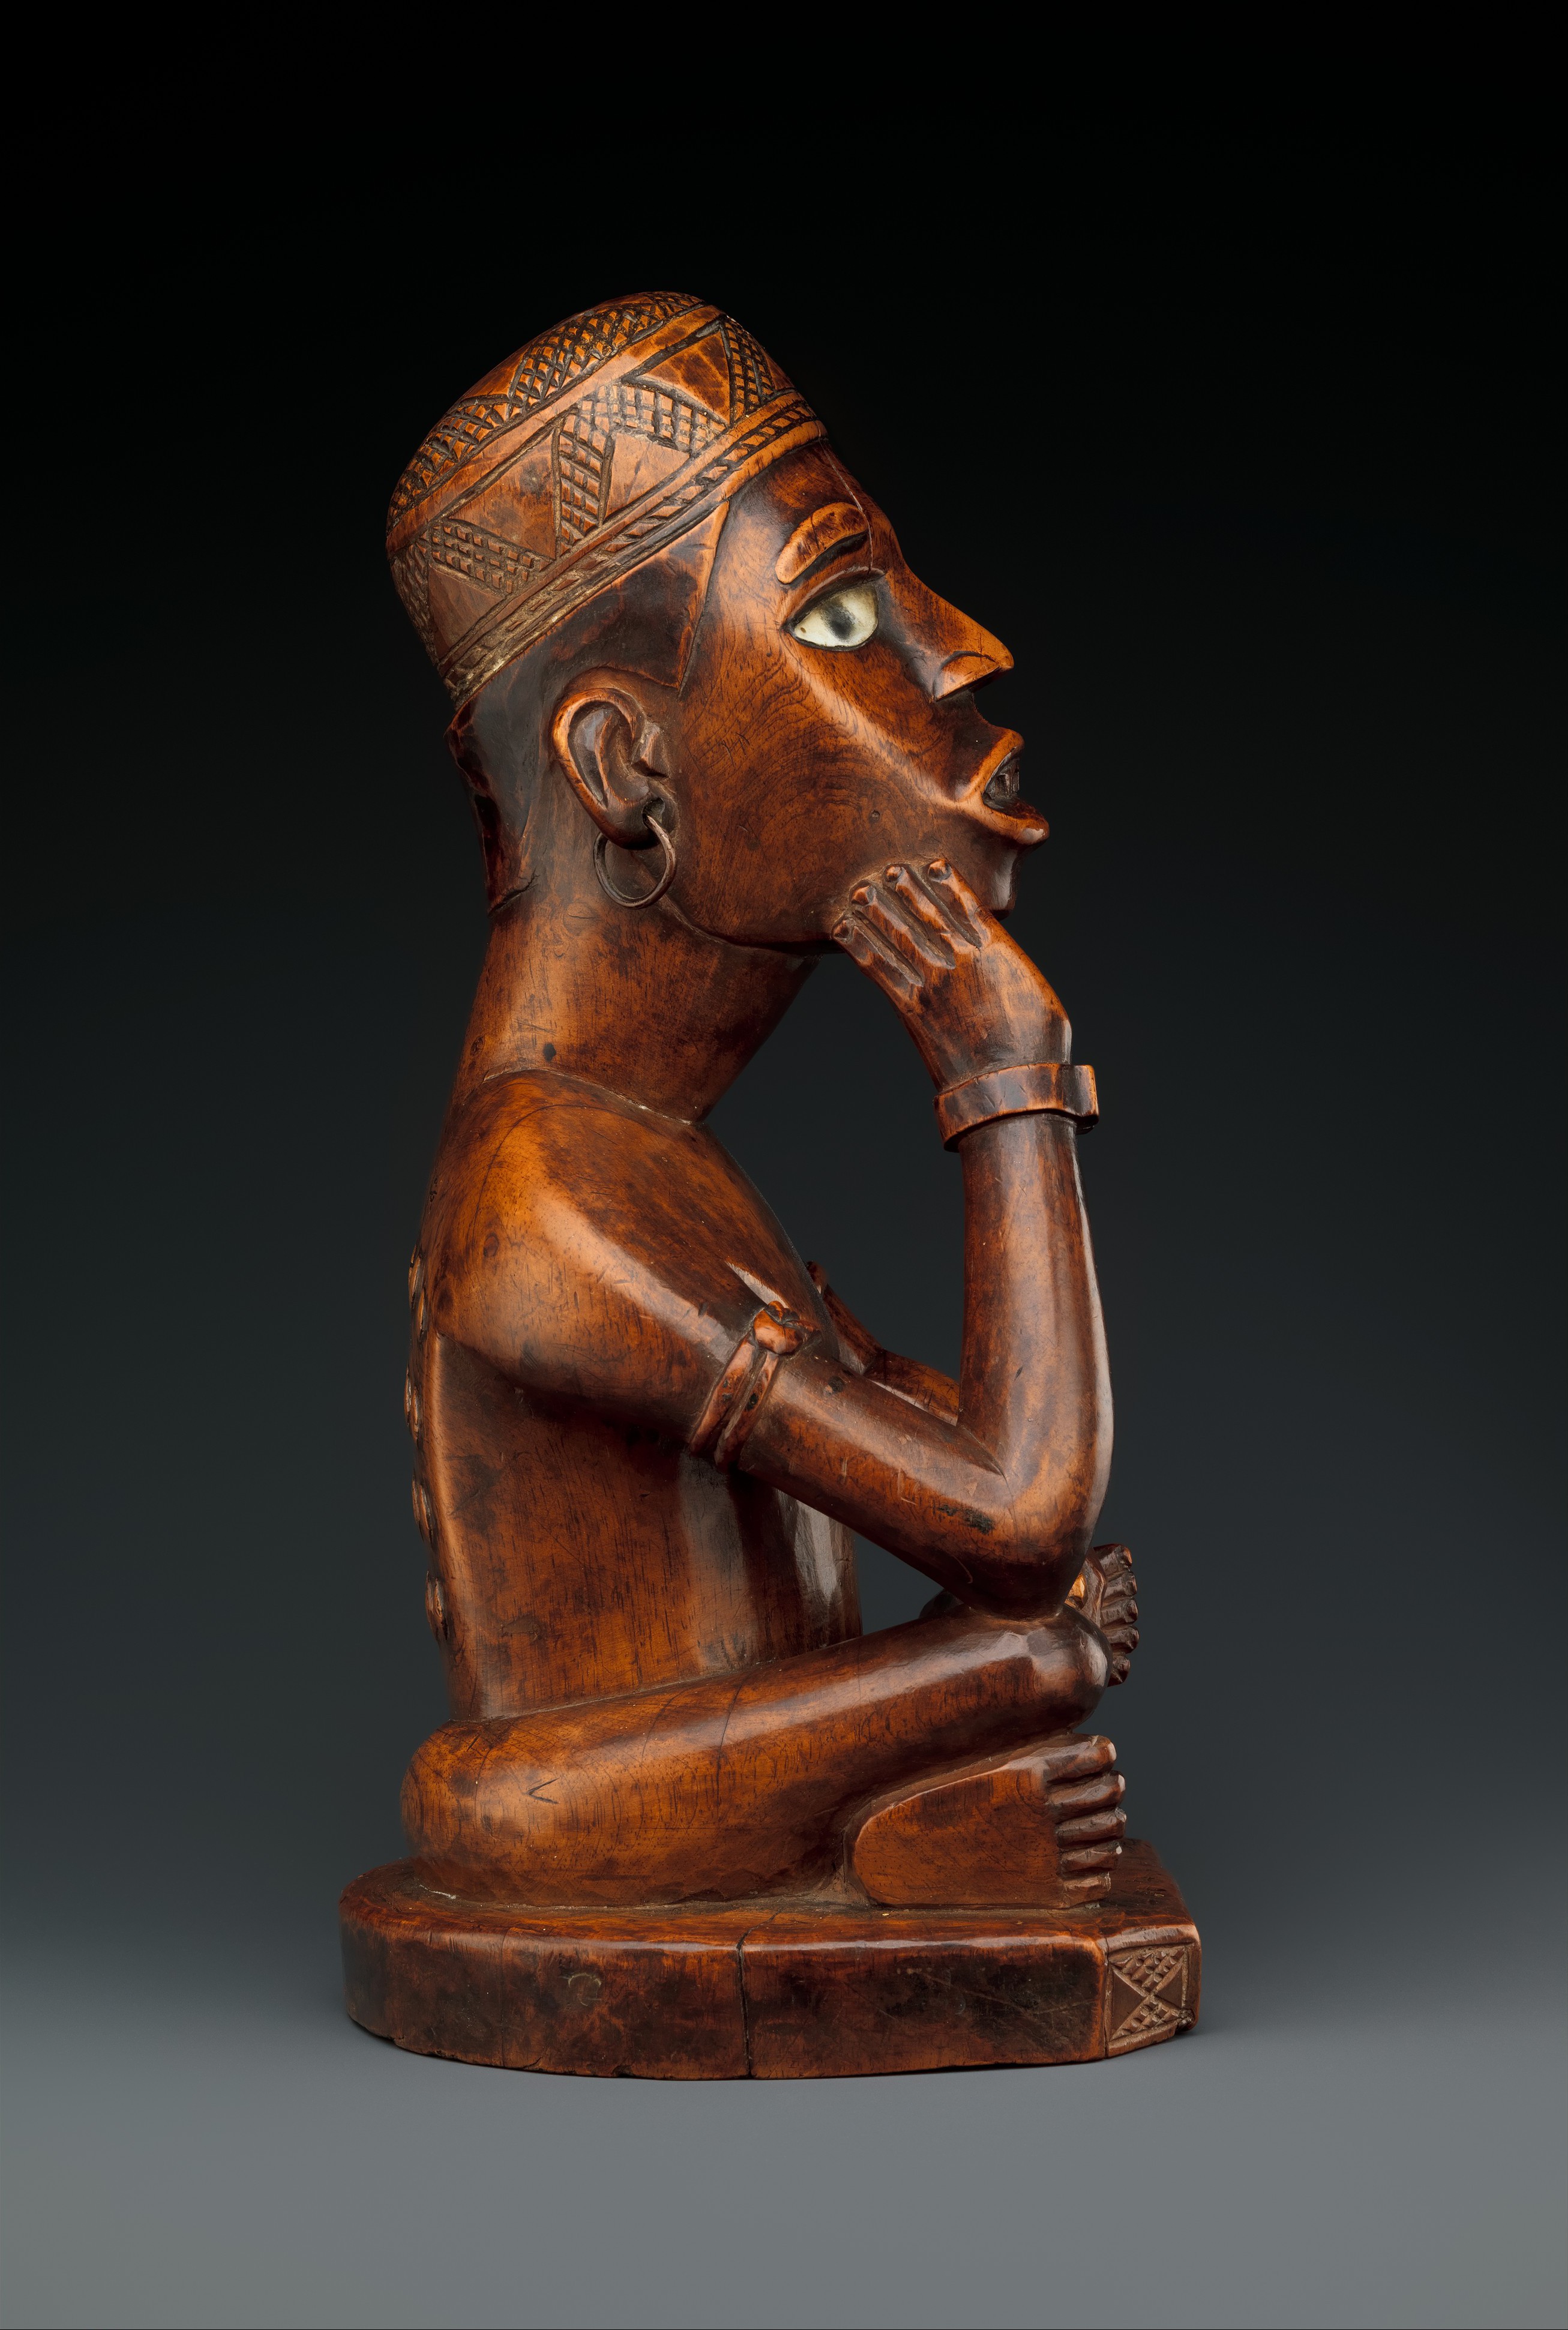 Seated Male Figure | Kongo peoples, Kakongo group | The 